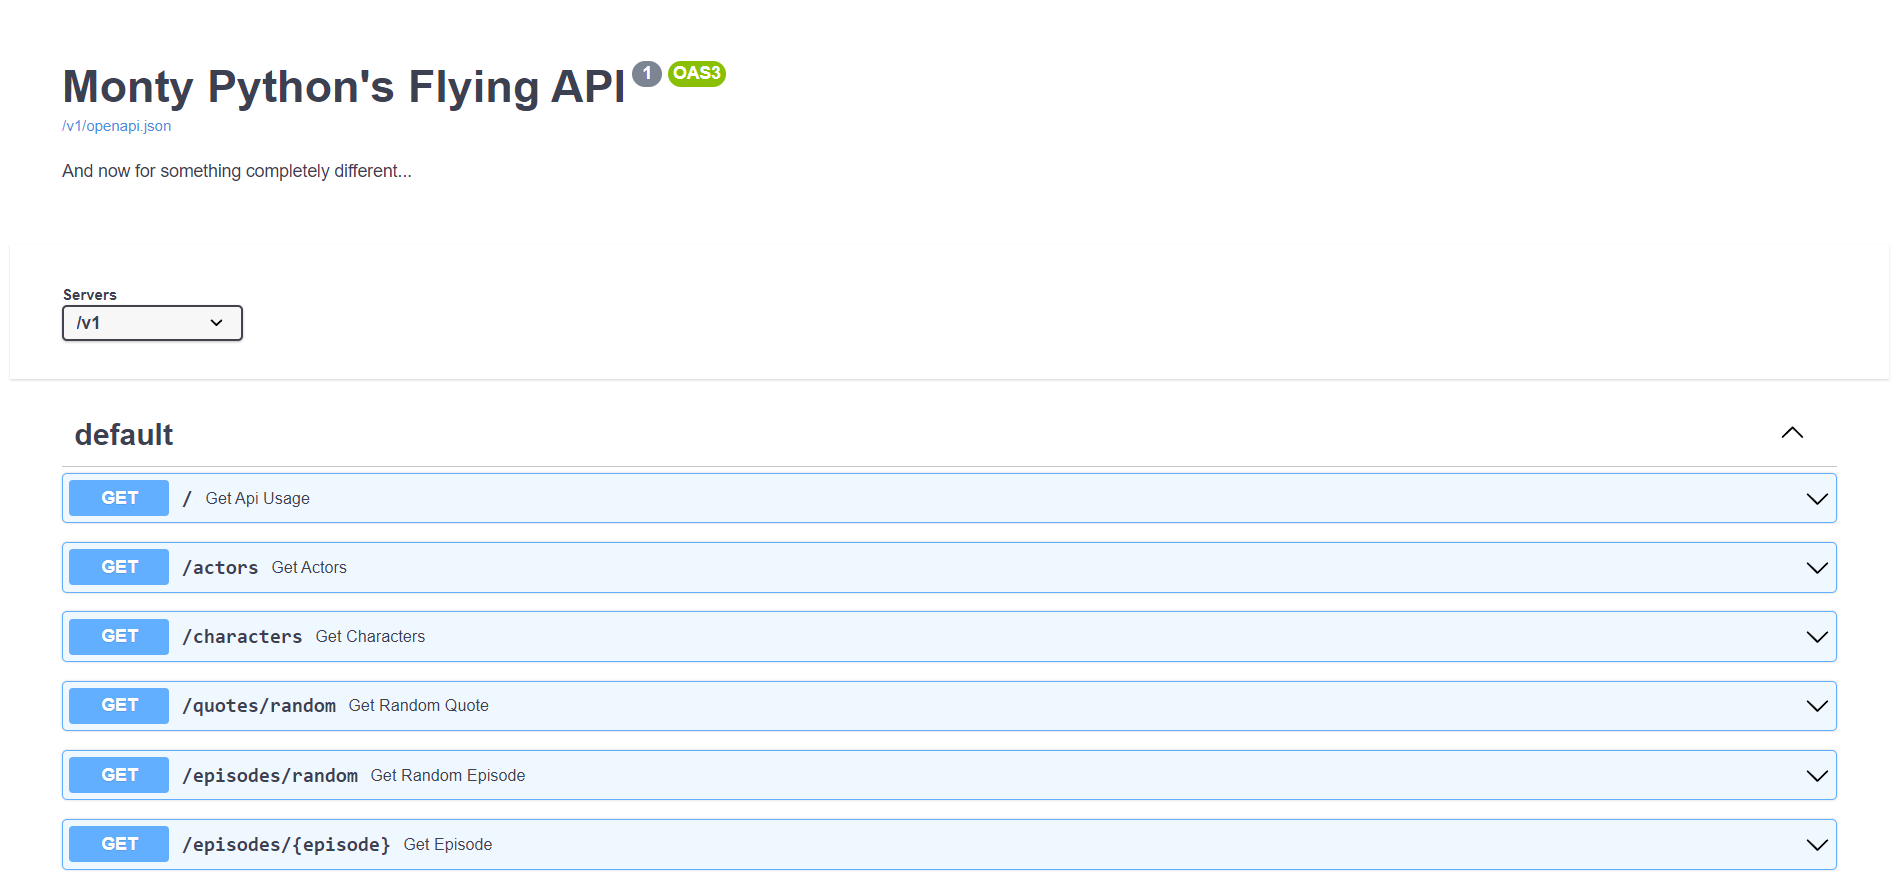 A swagger UI documentation of the API